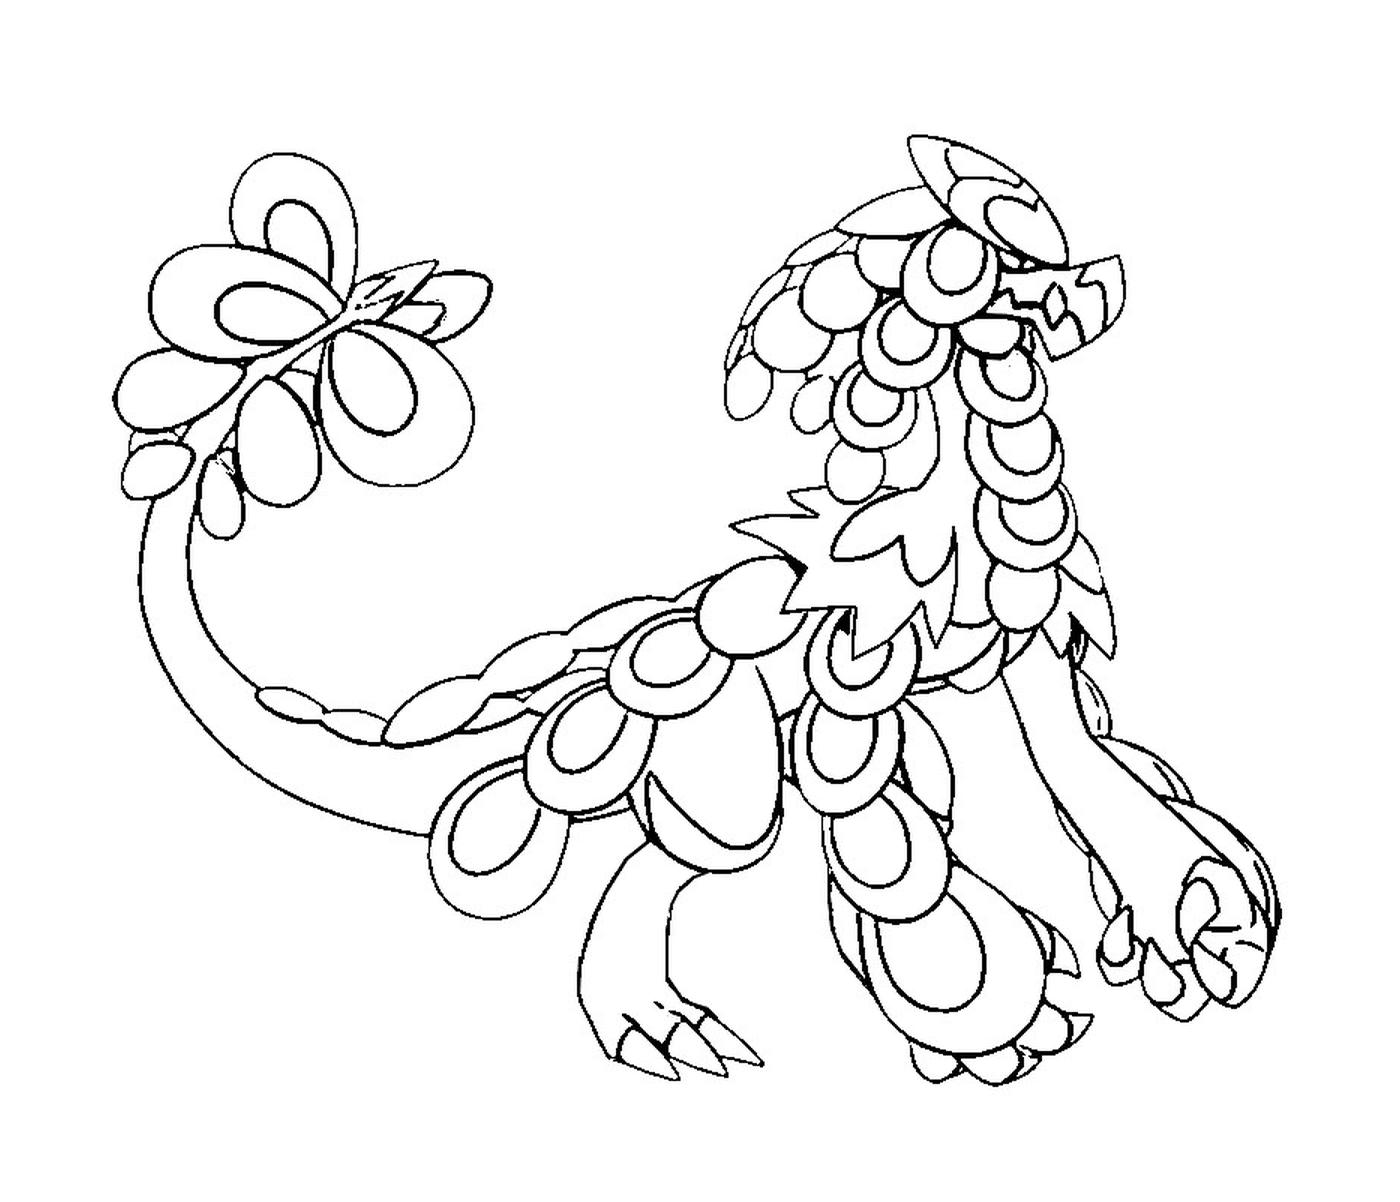  Ekaiser, un drago con un fiore sulla coda 